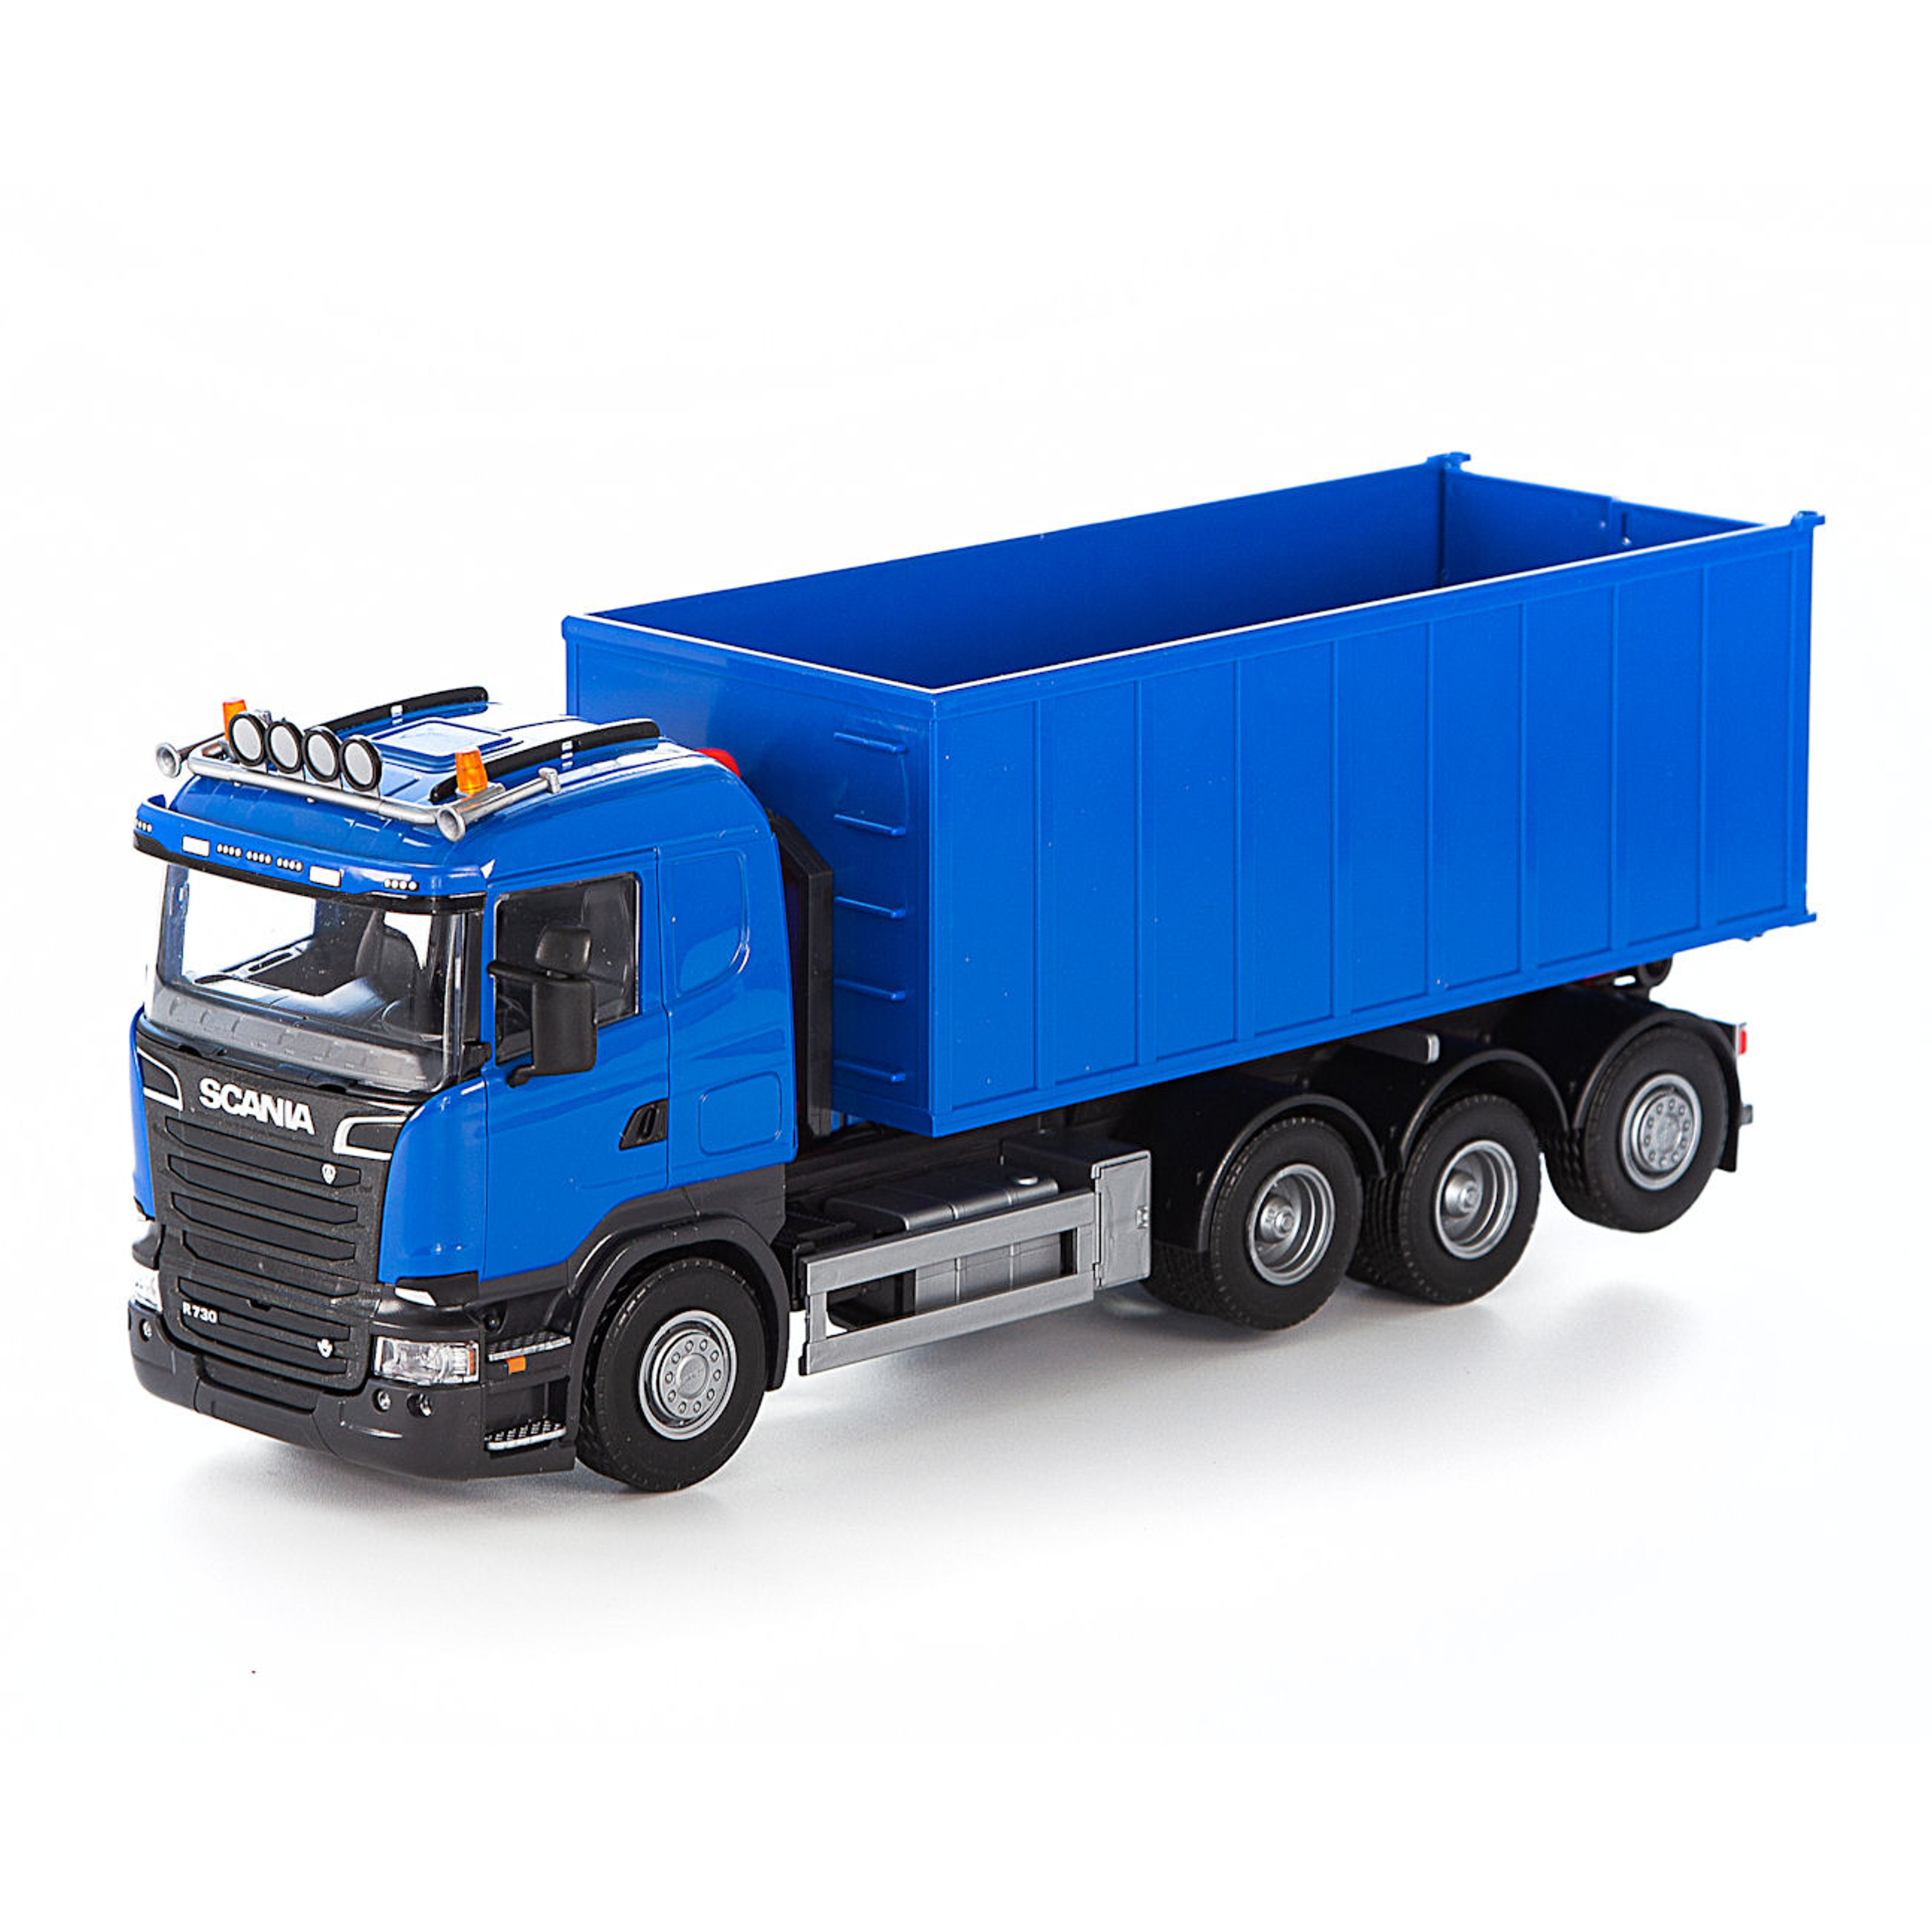 Toy trucks emek toy car truck with hook lift scania blue 1:25